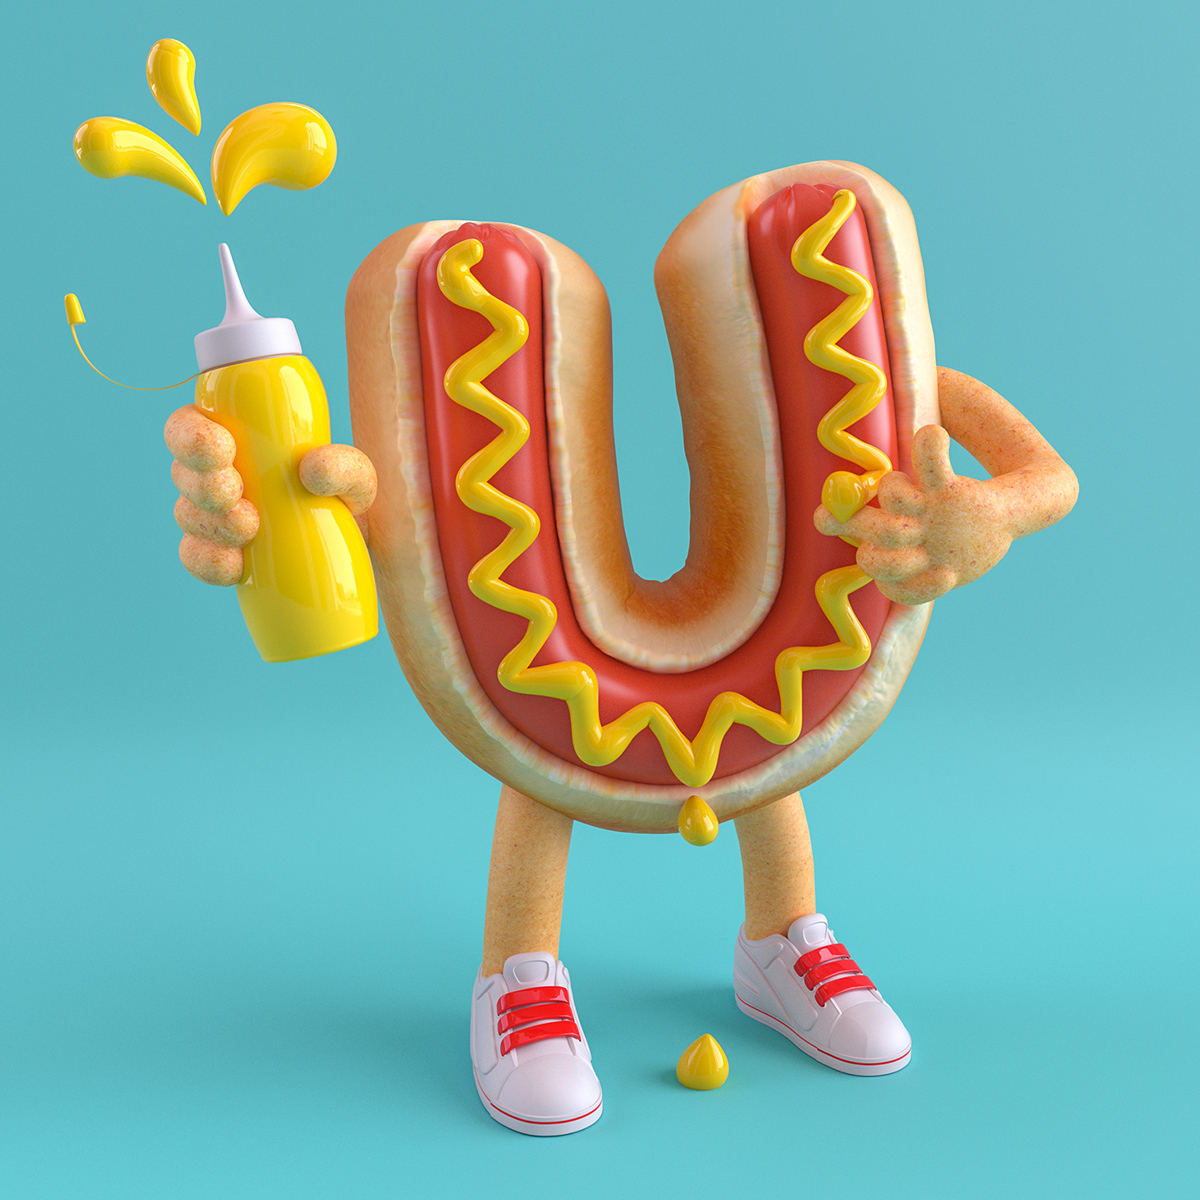 Hot Dog 'U'